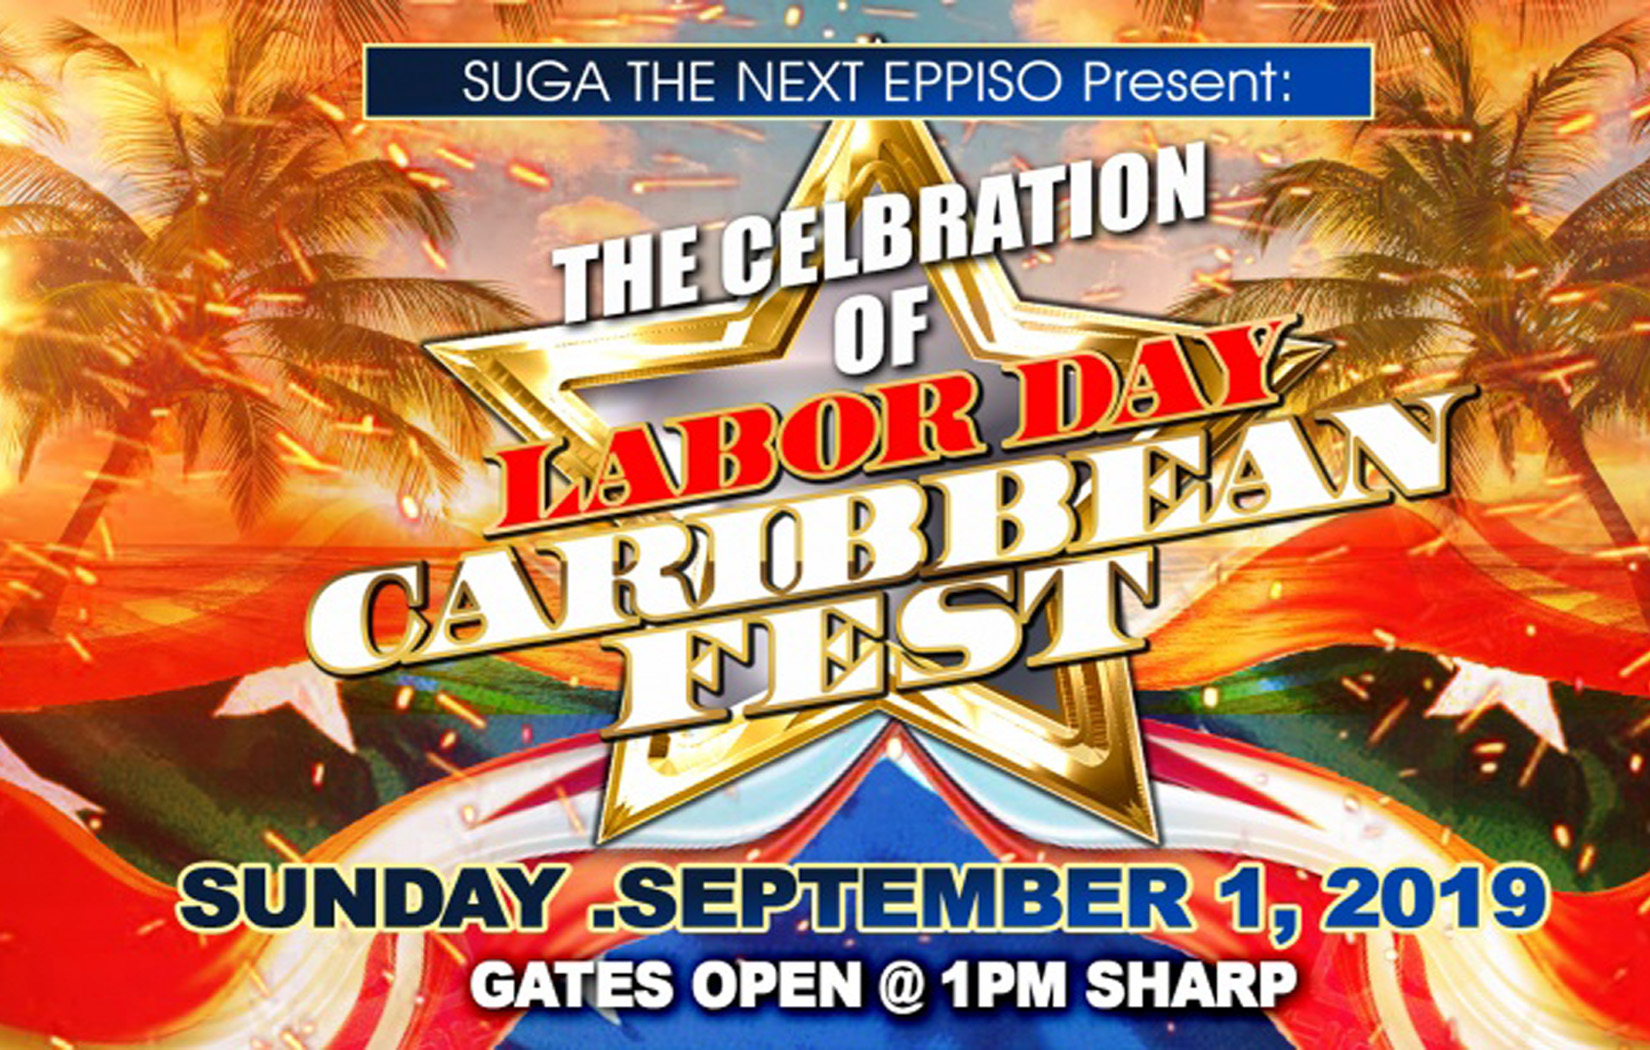 Press Release- The Celebration of Labor Day Caribbean Fest - SugaFest